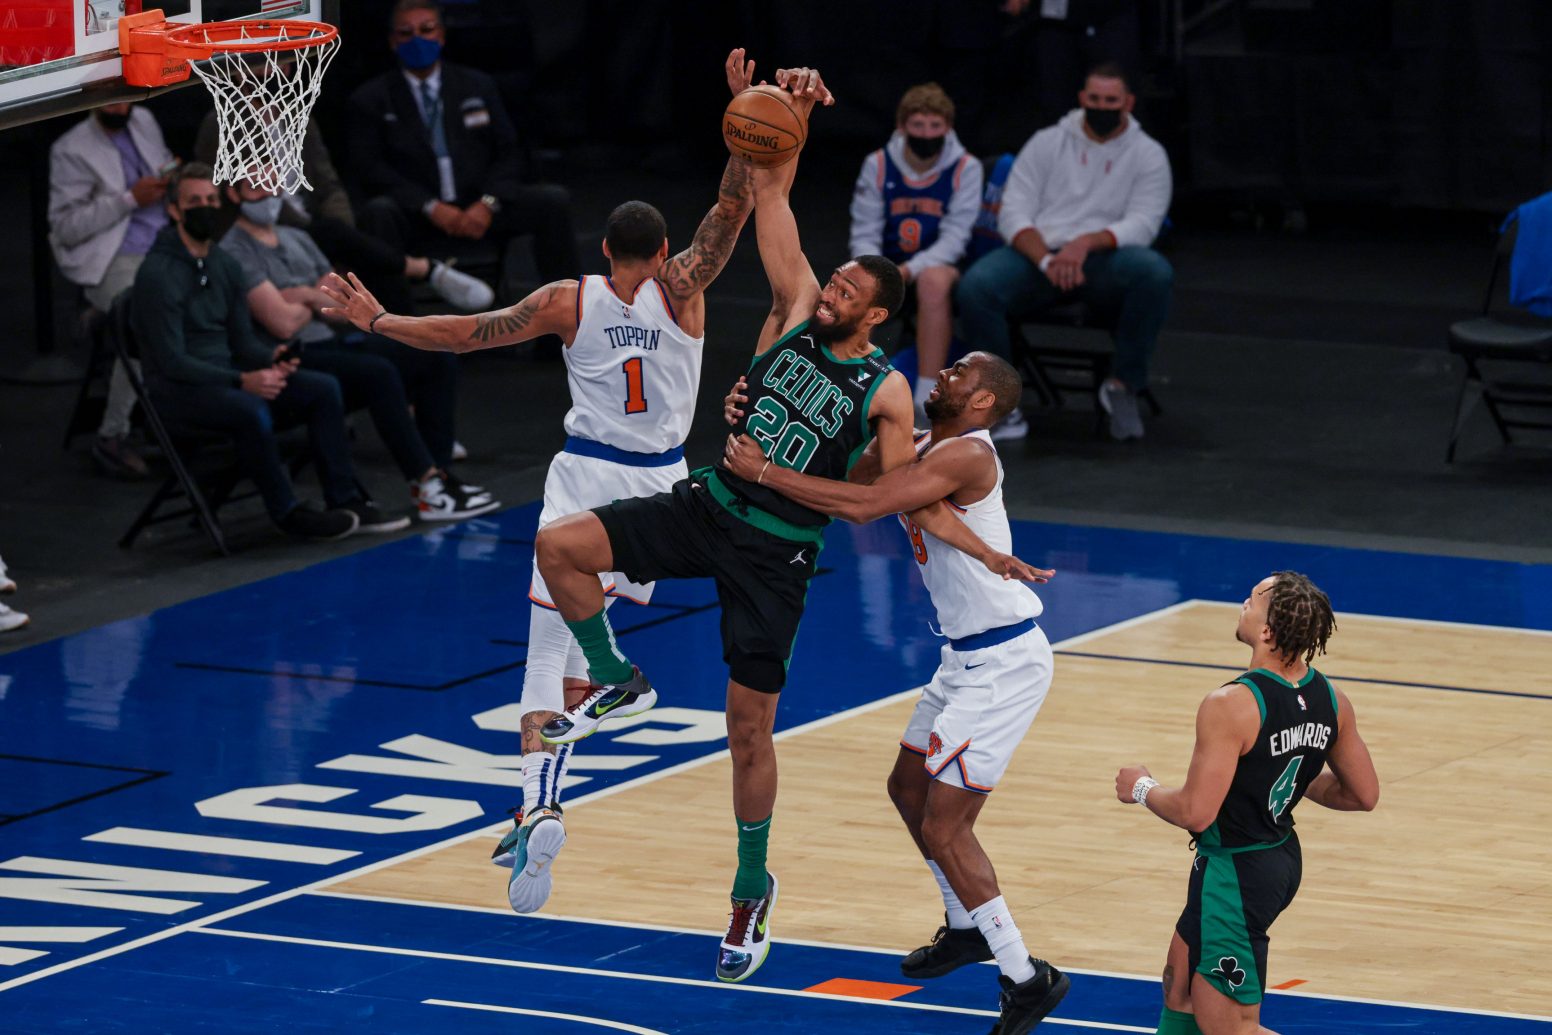 Rapid Recap: Despite impressive rally, Celtics reserves fall to Knicks to end regular season